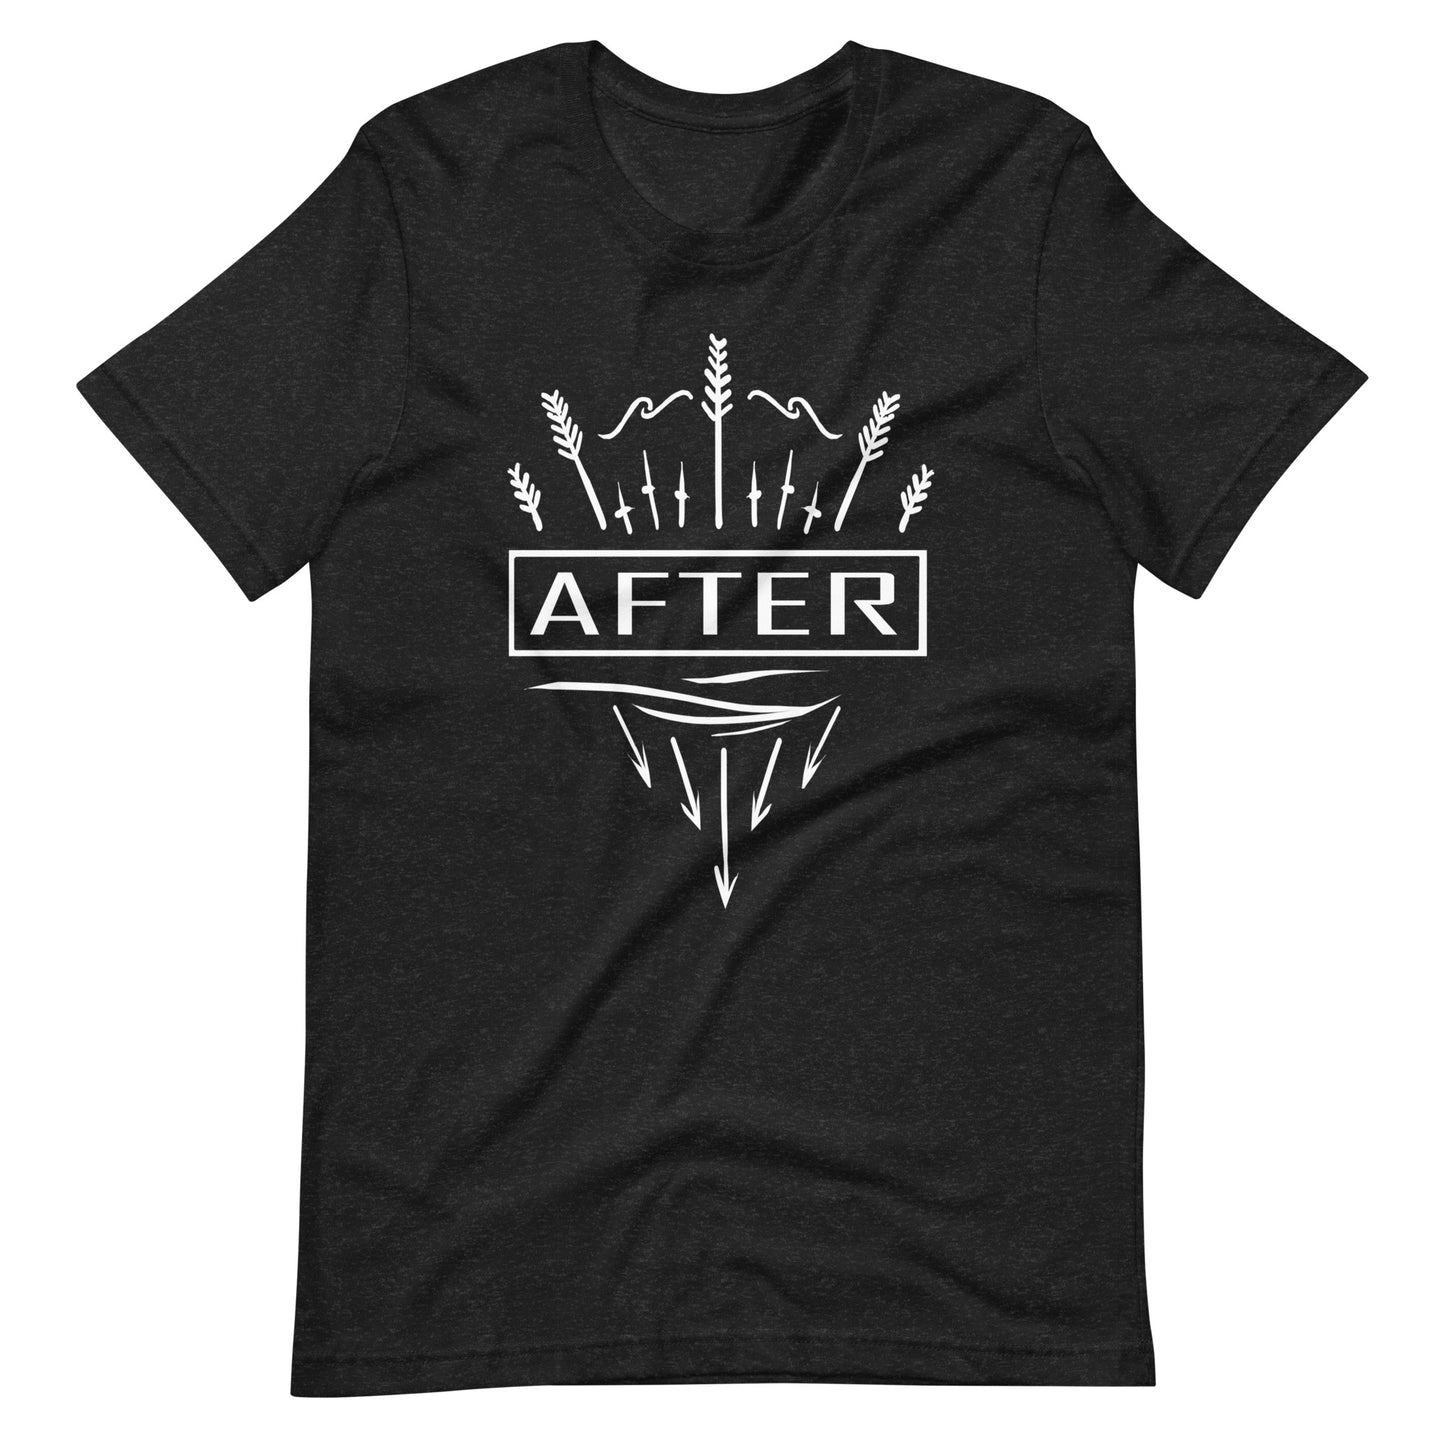 After - Men's t-shirt - Black Heather Front